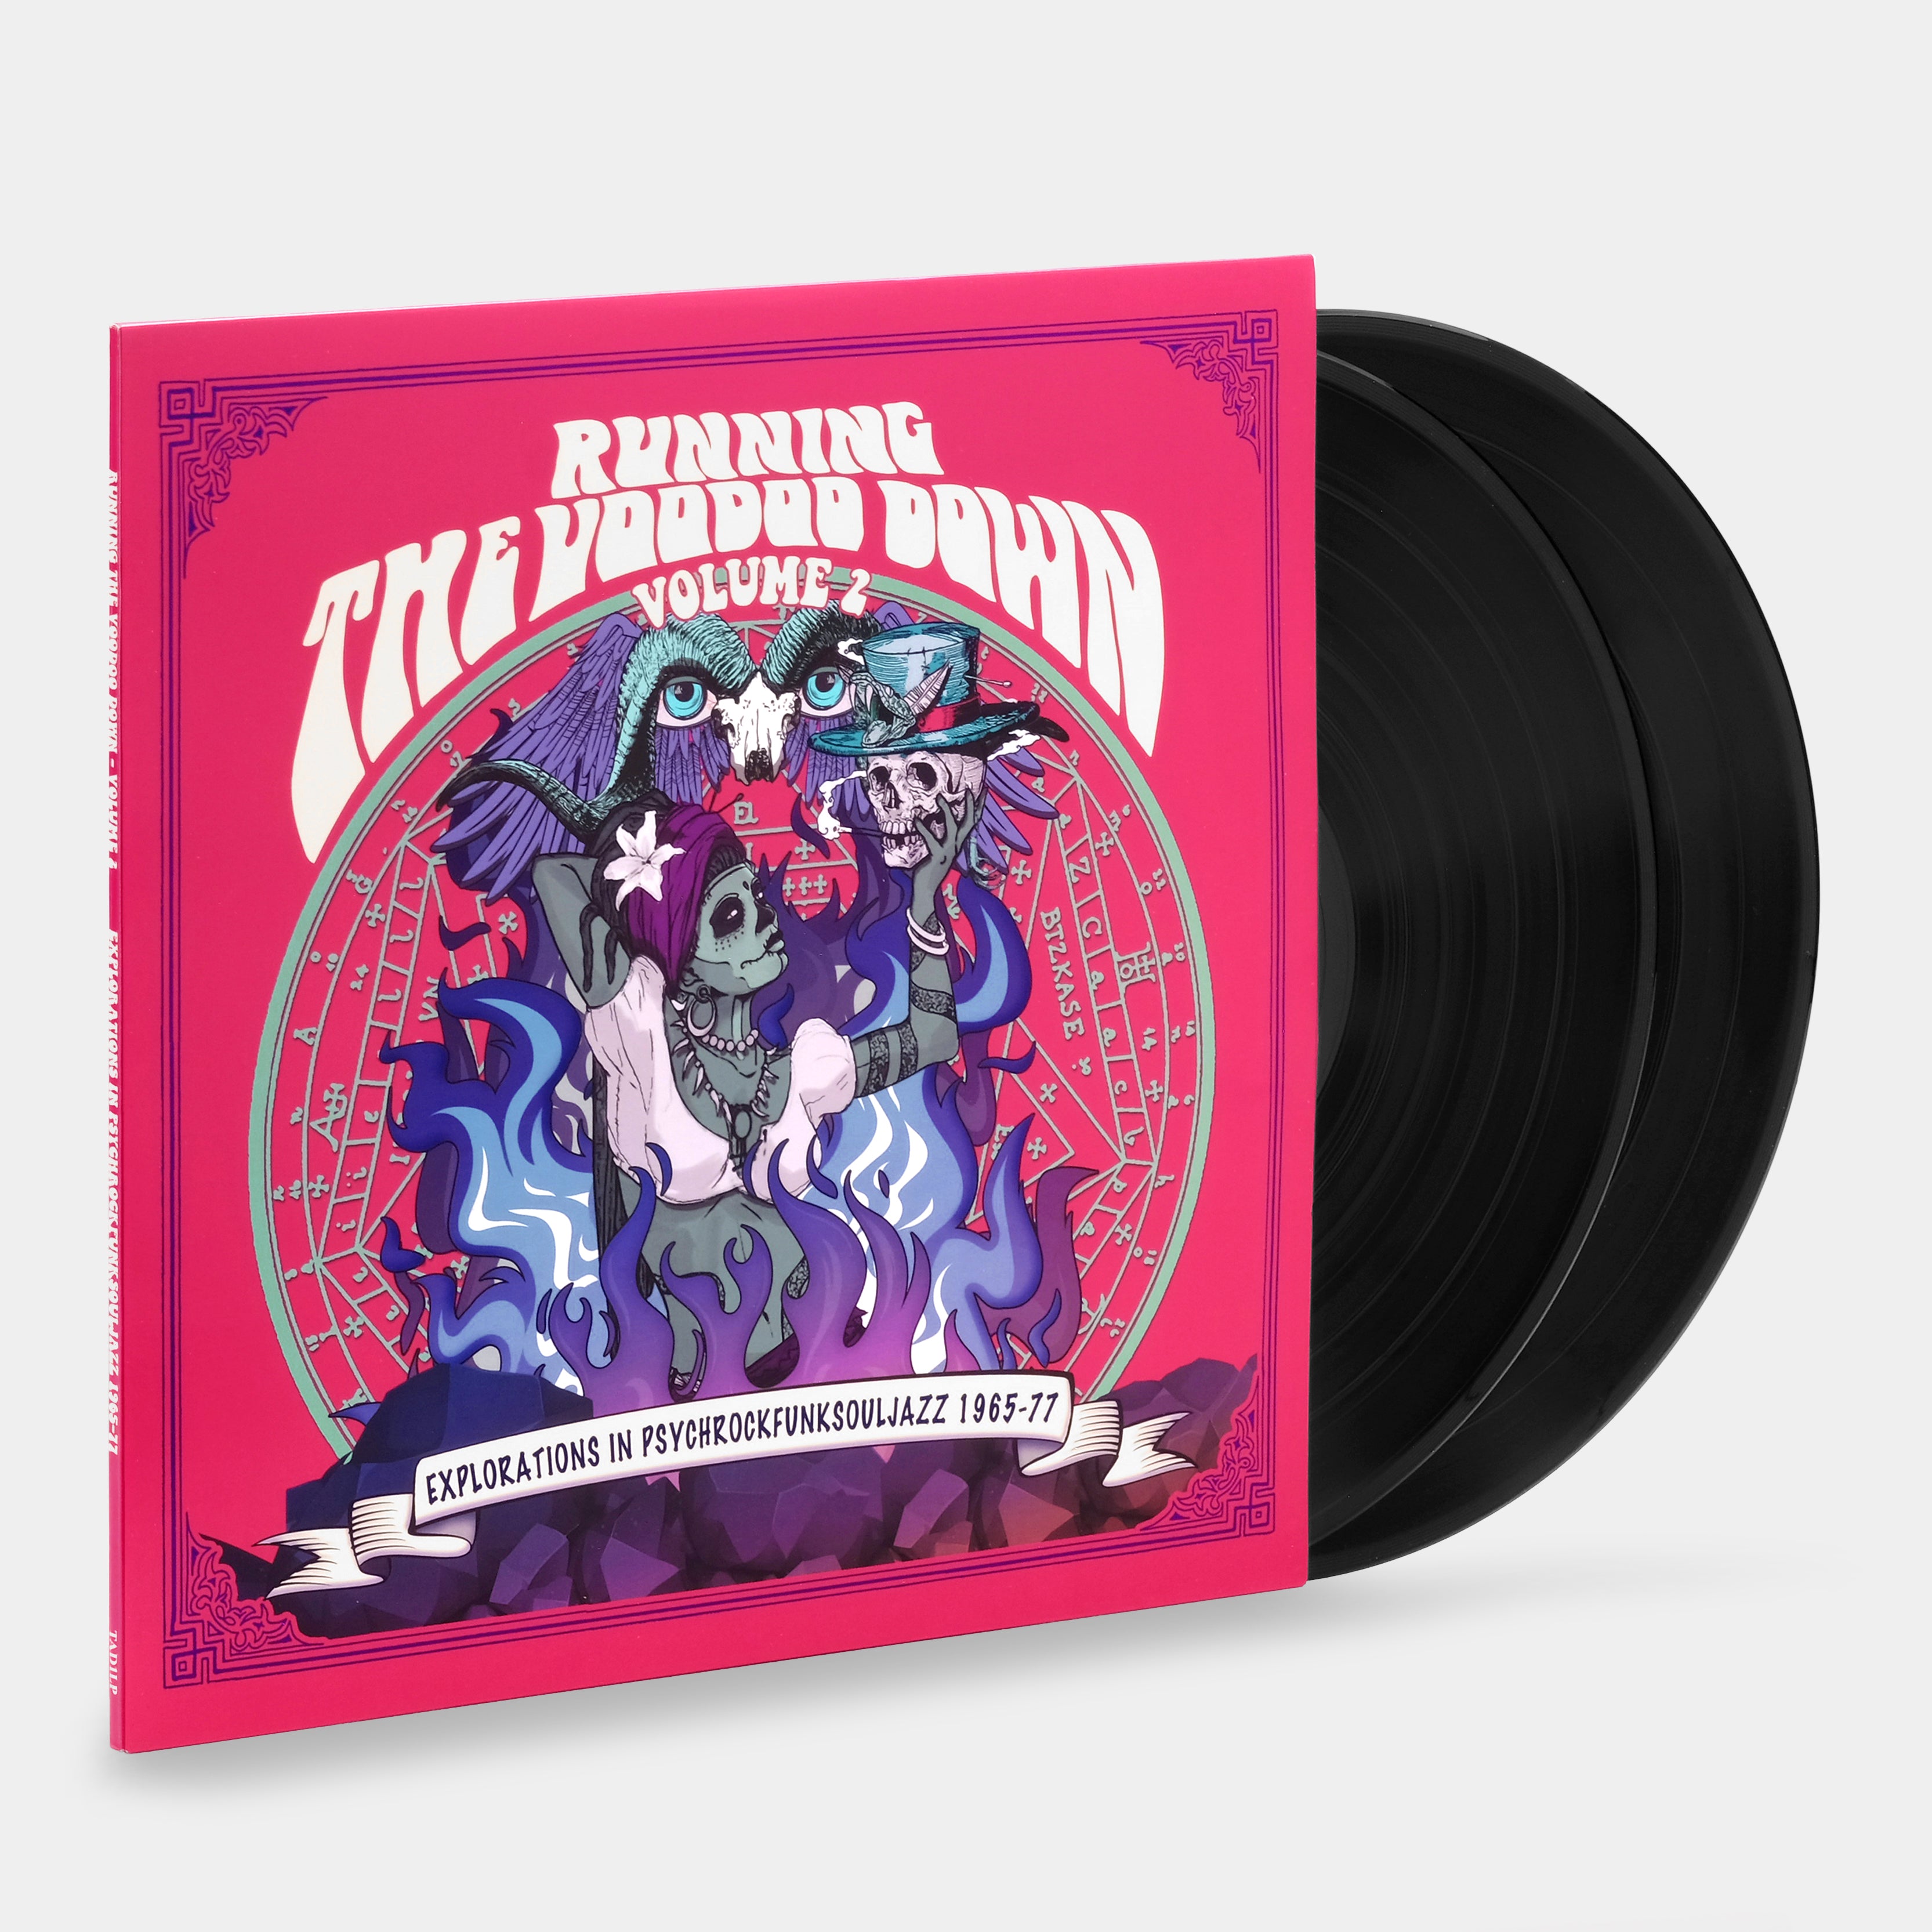 Running The Voodoo Down Volume 2 (Explorations In Psychrockfunksouljazz 1965-77) 2xLP Vinyl Record